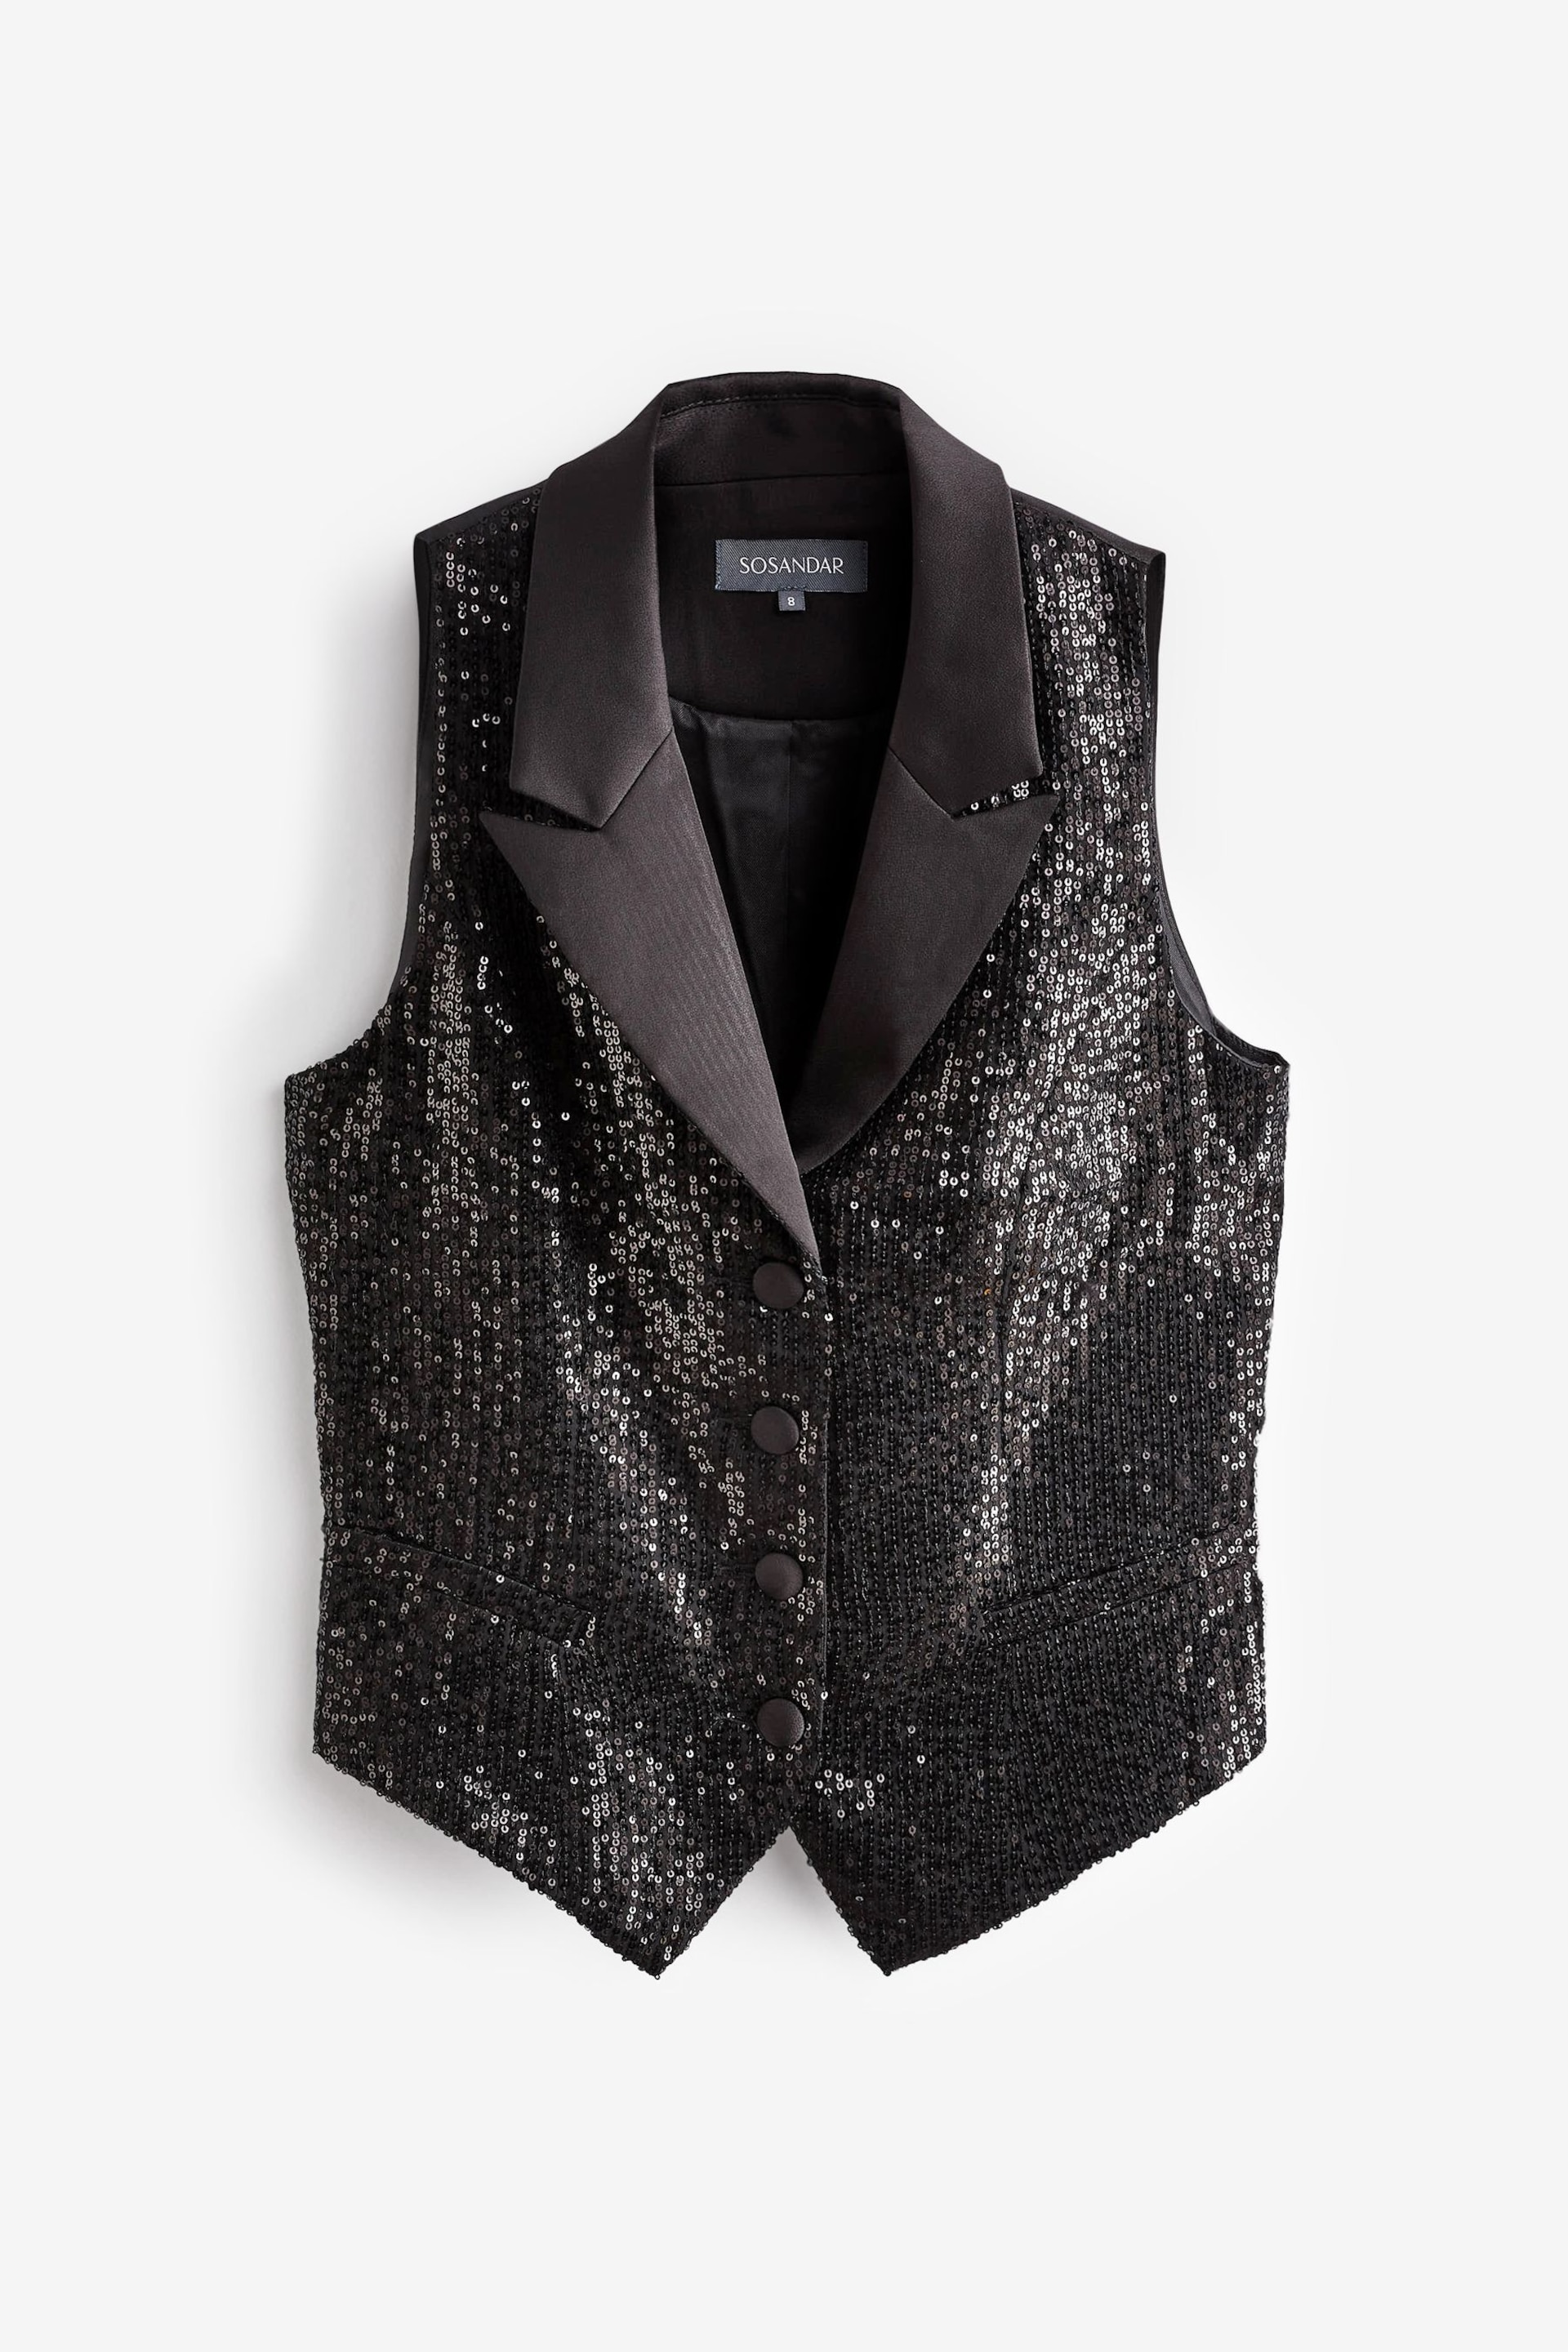 Sosandar Black Sequin Waistcoat Jacket With Satin Detail - Image 6 of 6